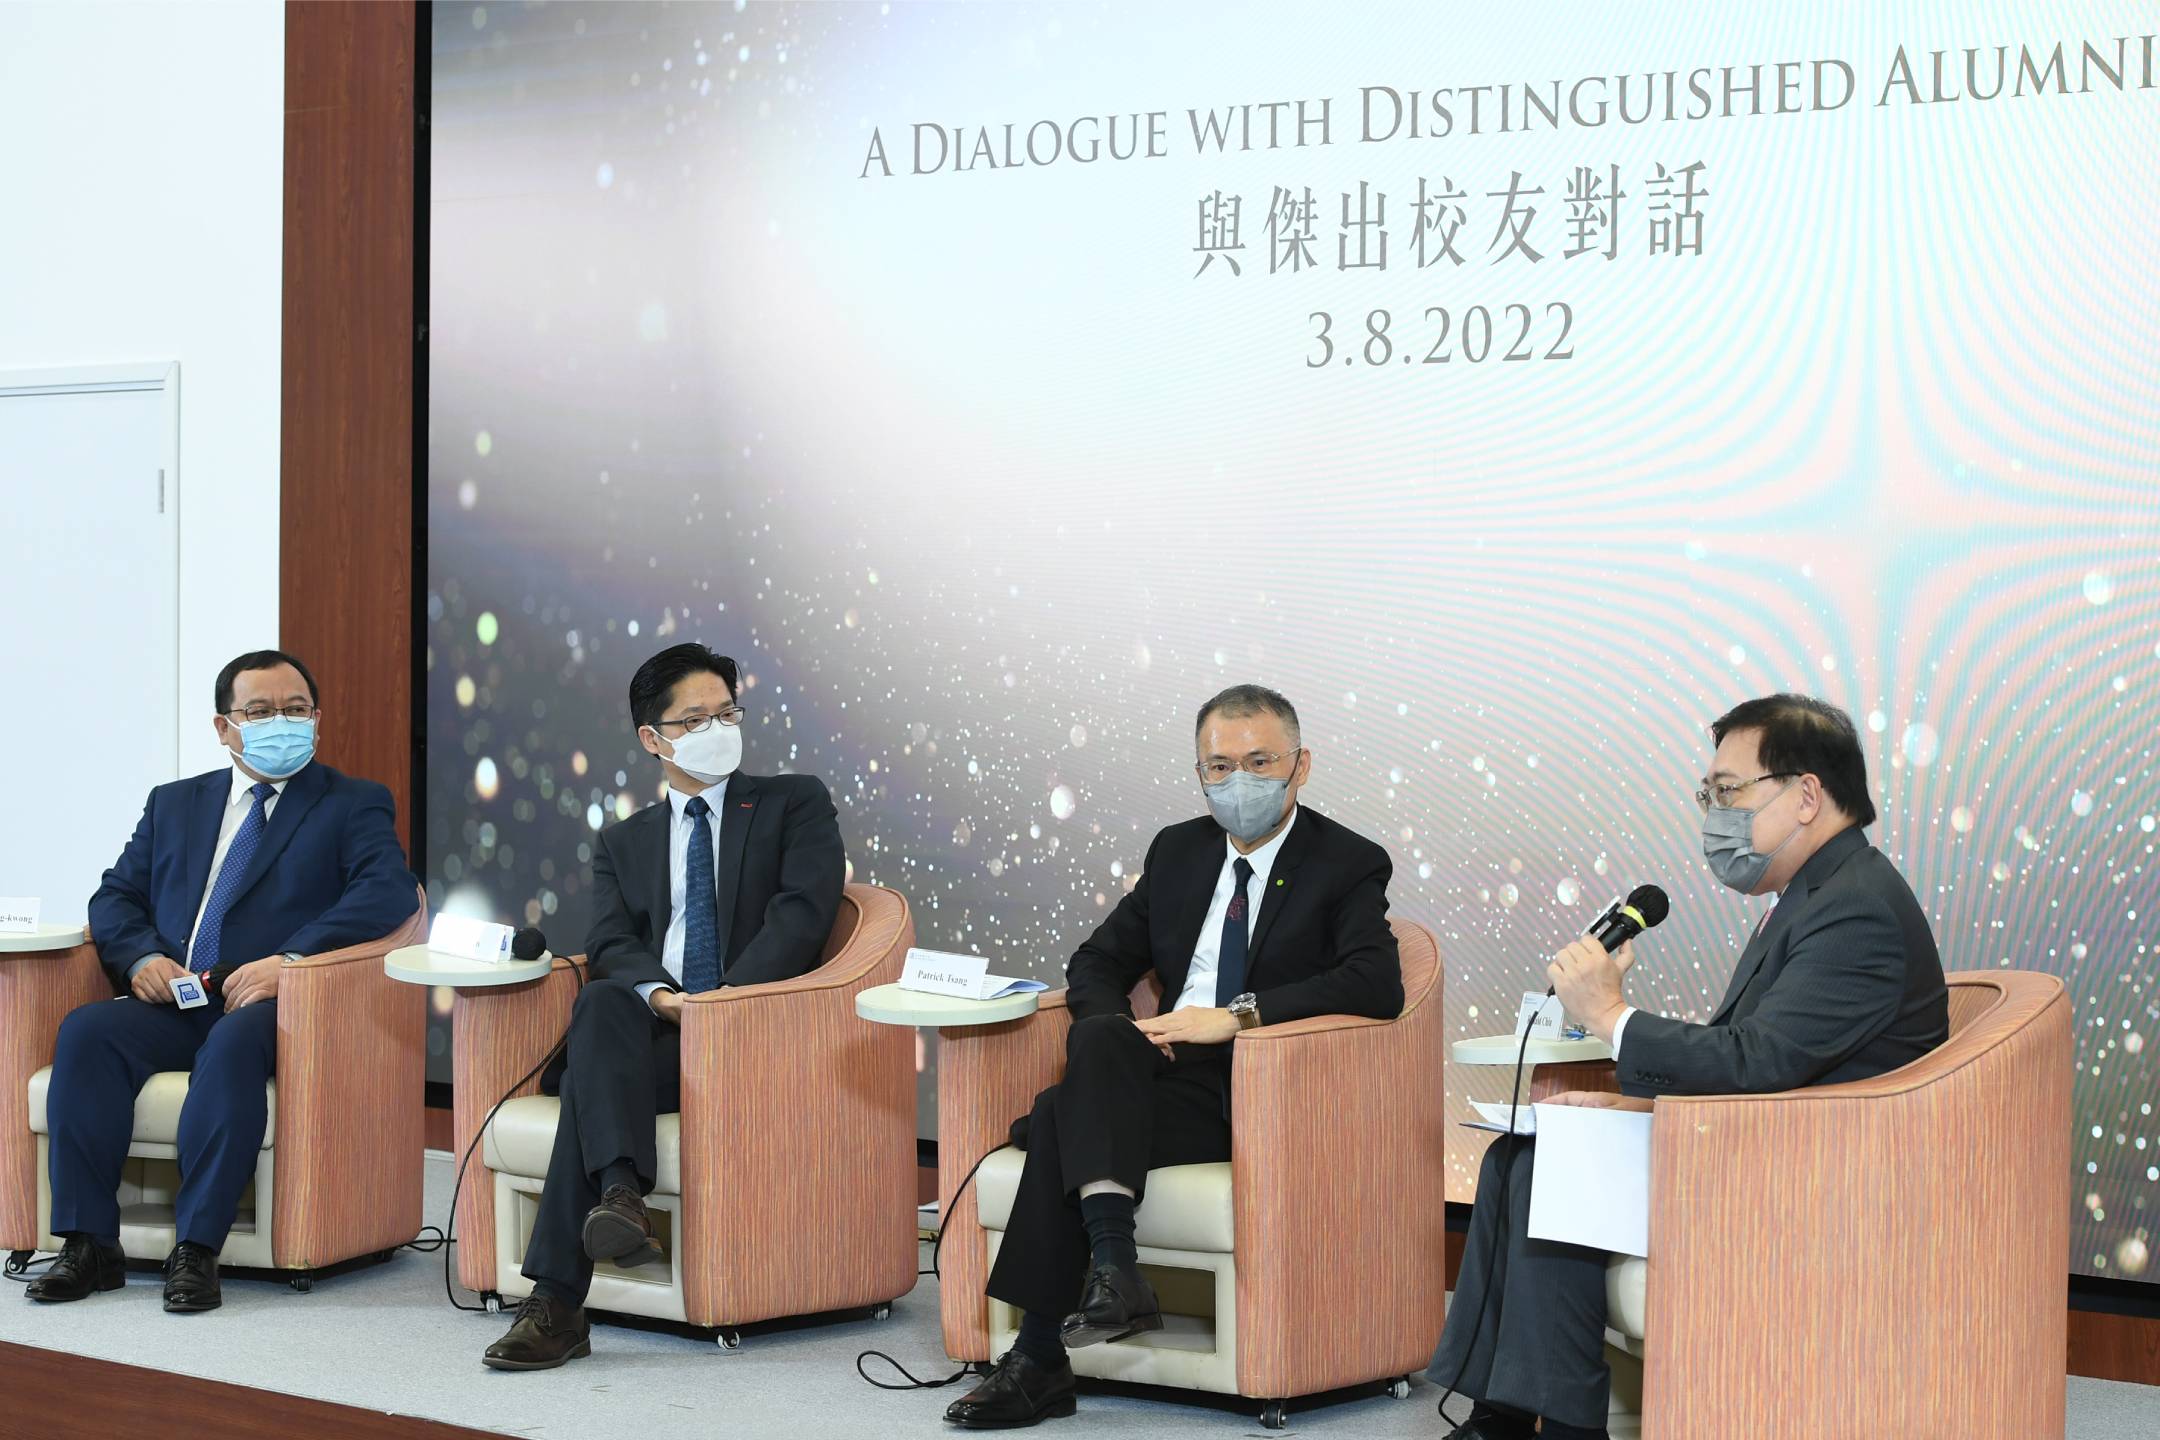 Alumnus Professor Ronald Chiu discusses various topics with the Award recipients.